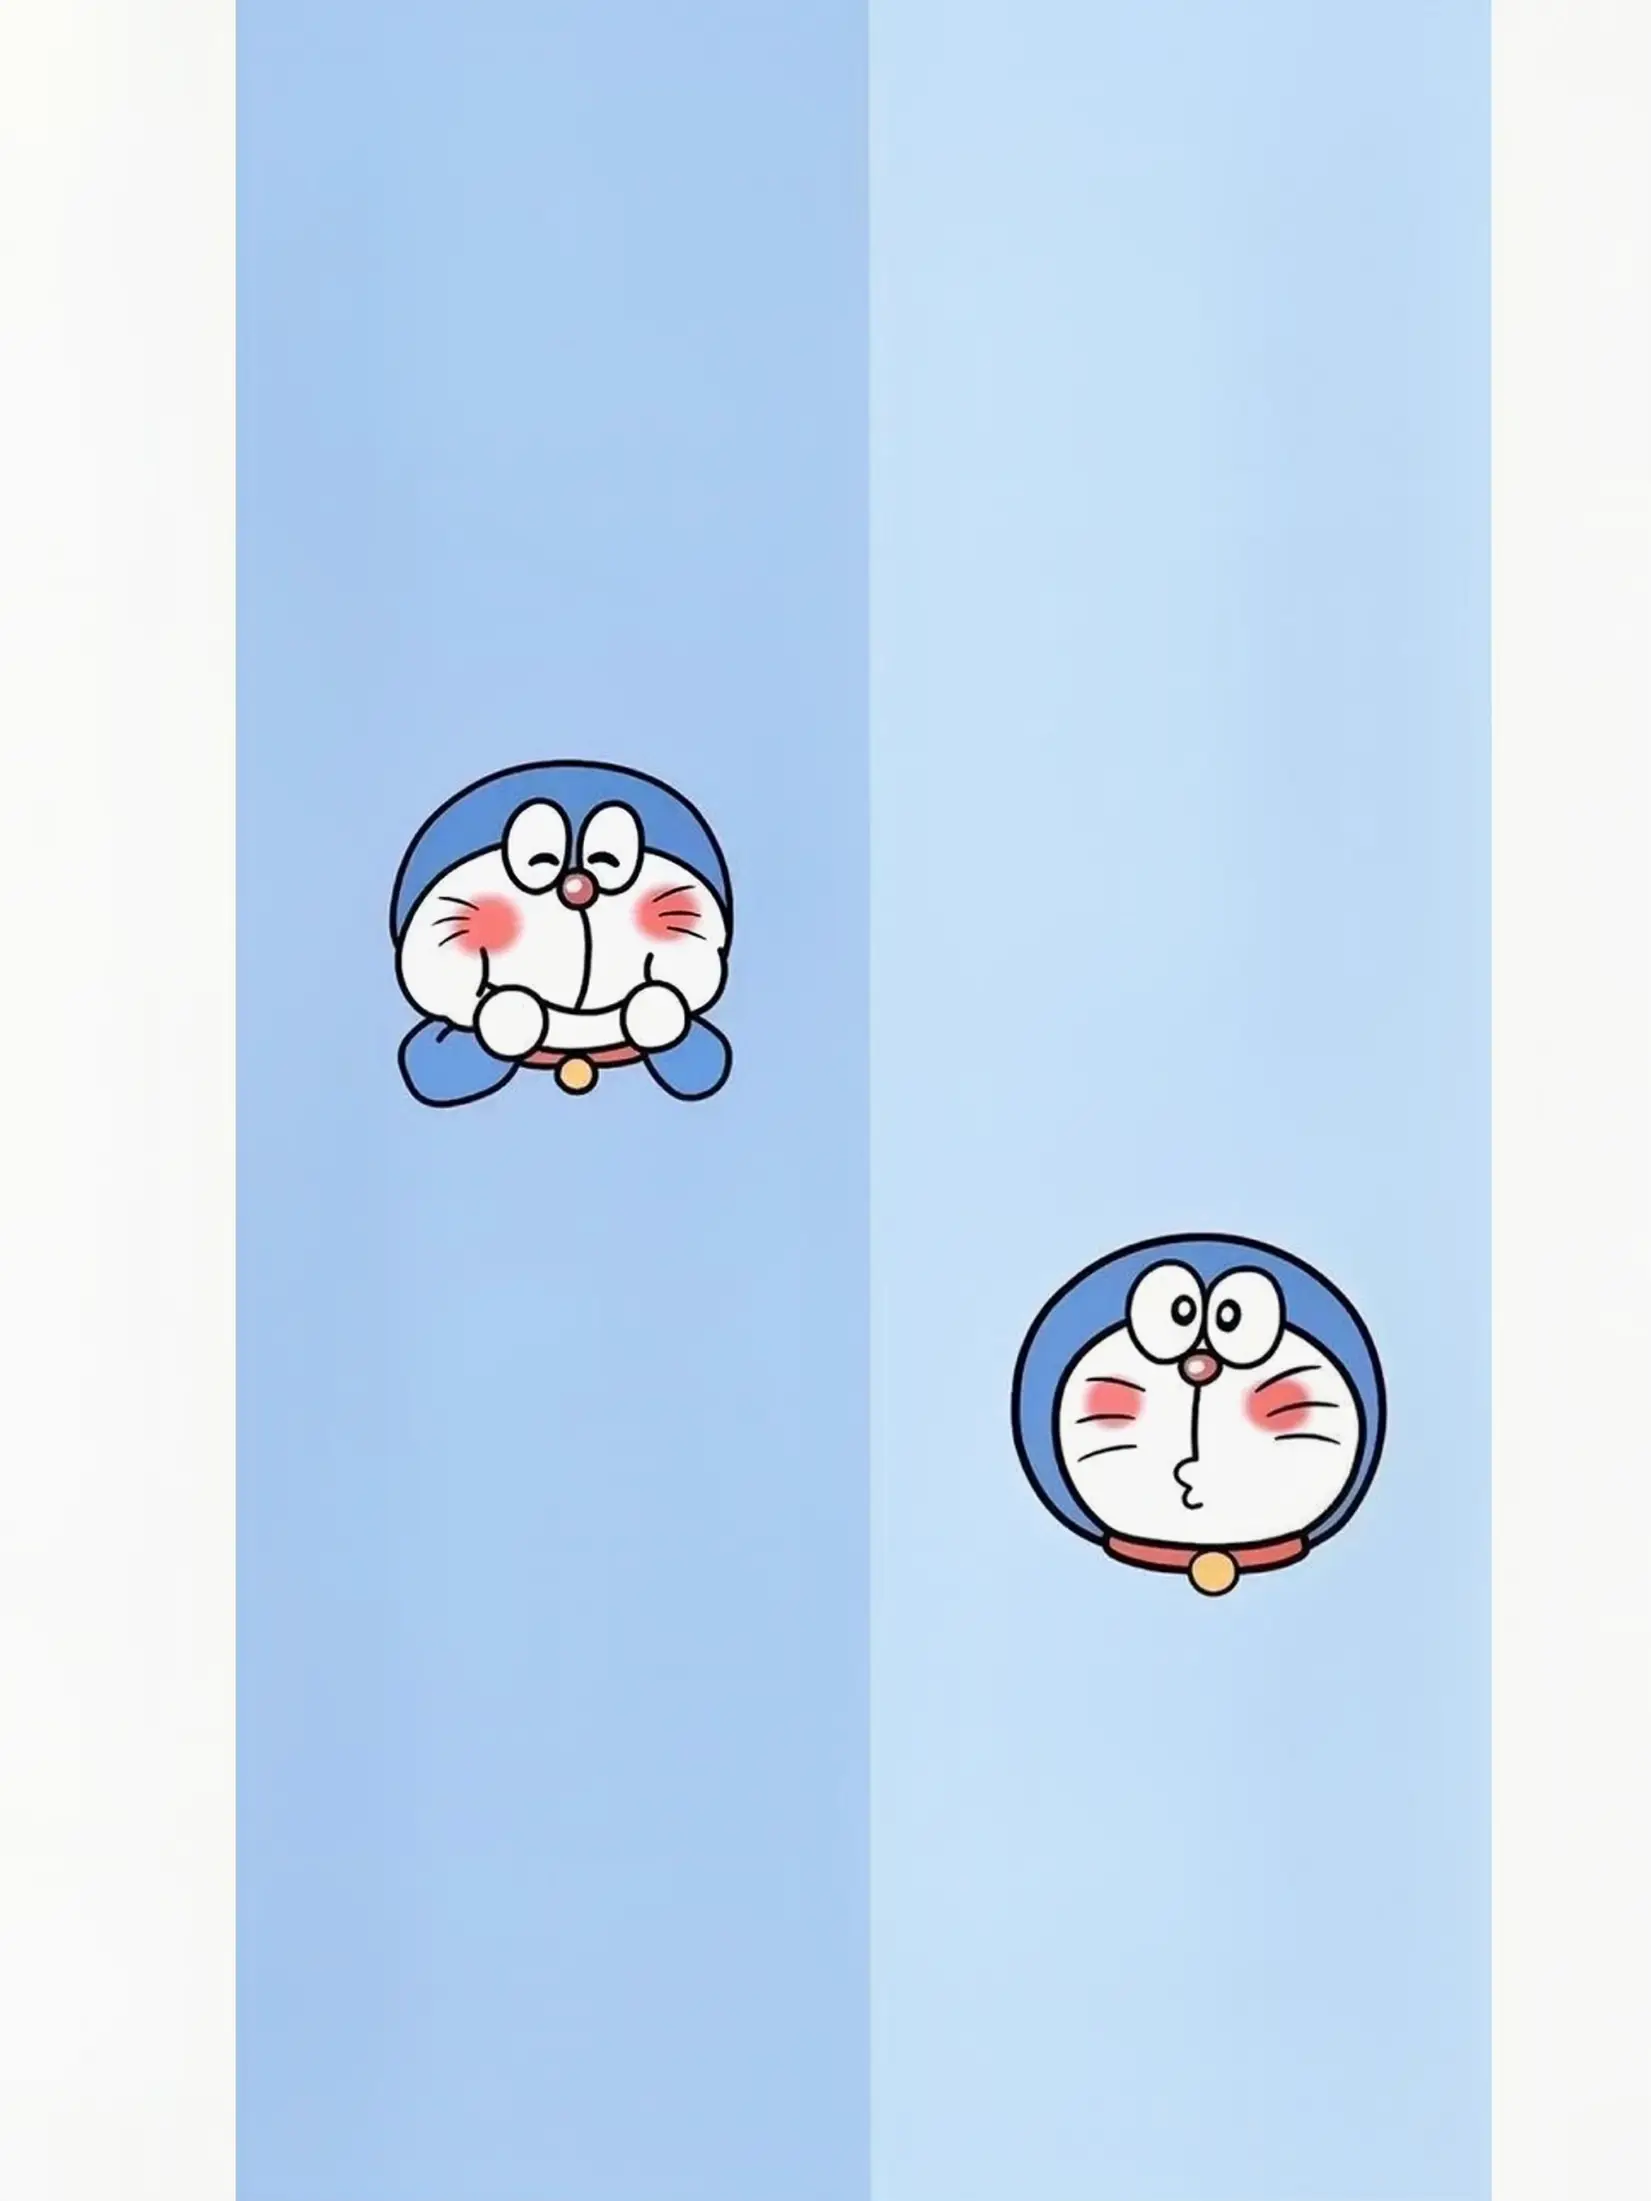 Two cartoon images of Doraemon on a blue background - Doraemon